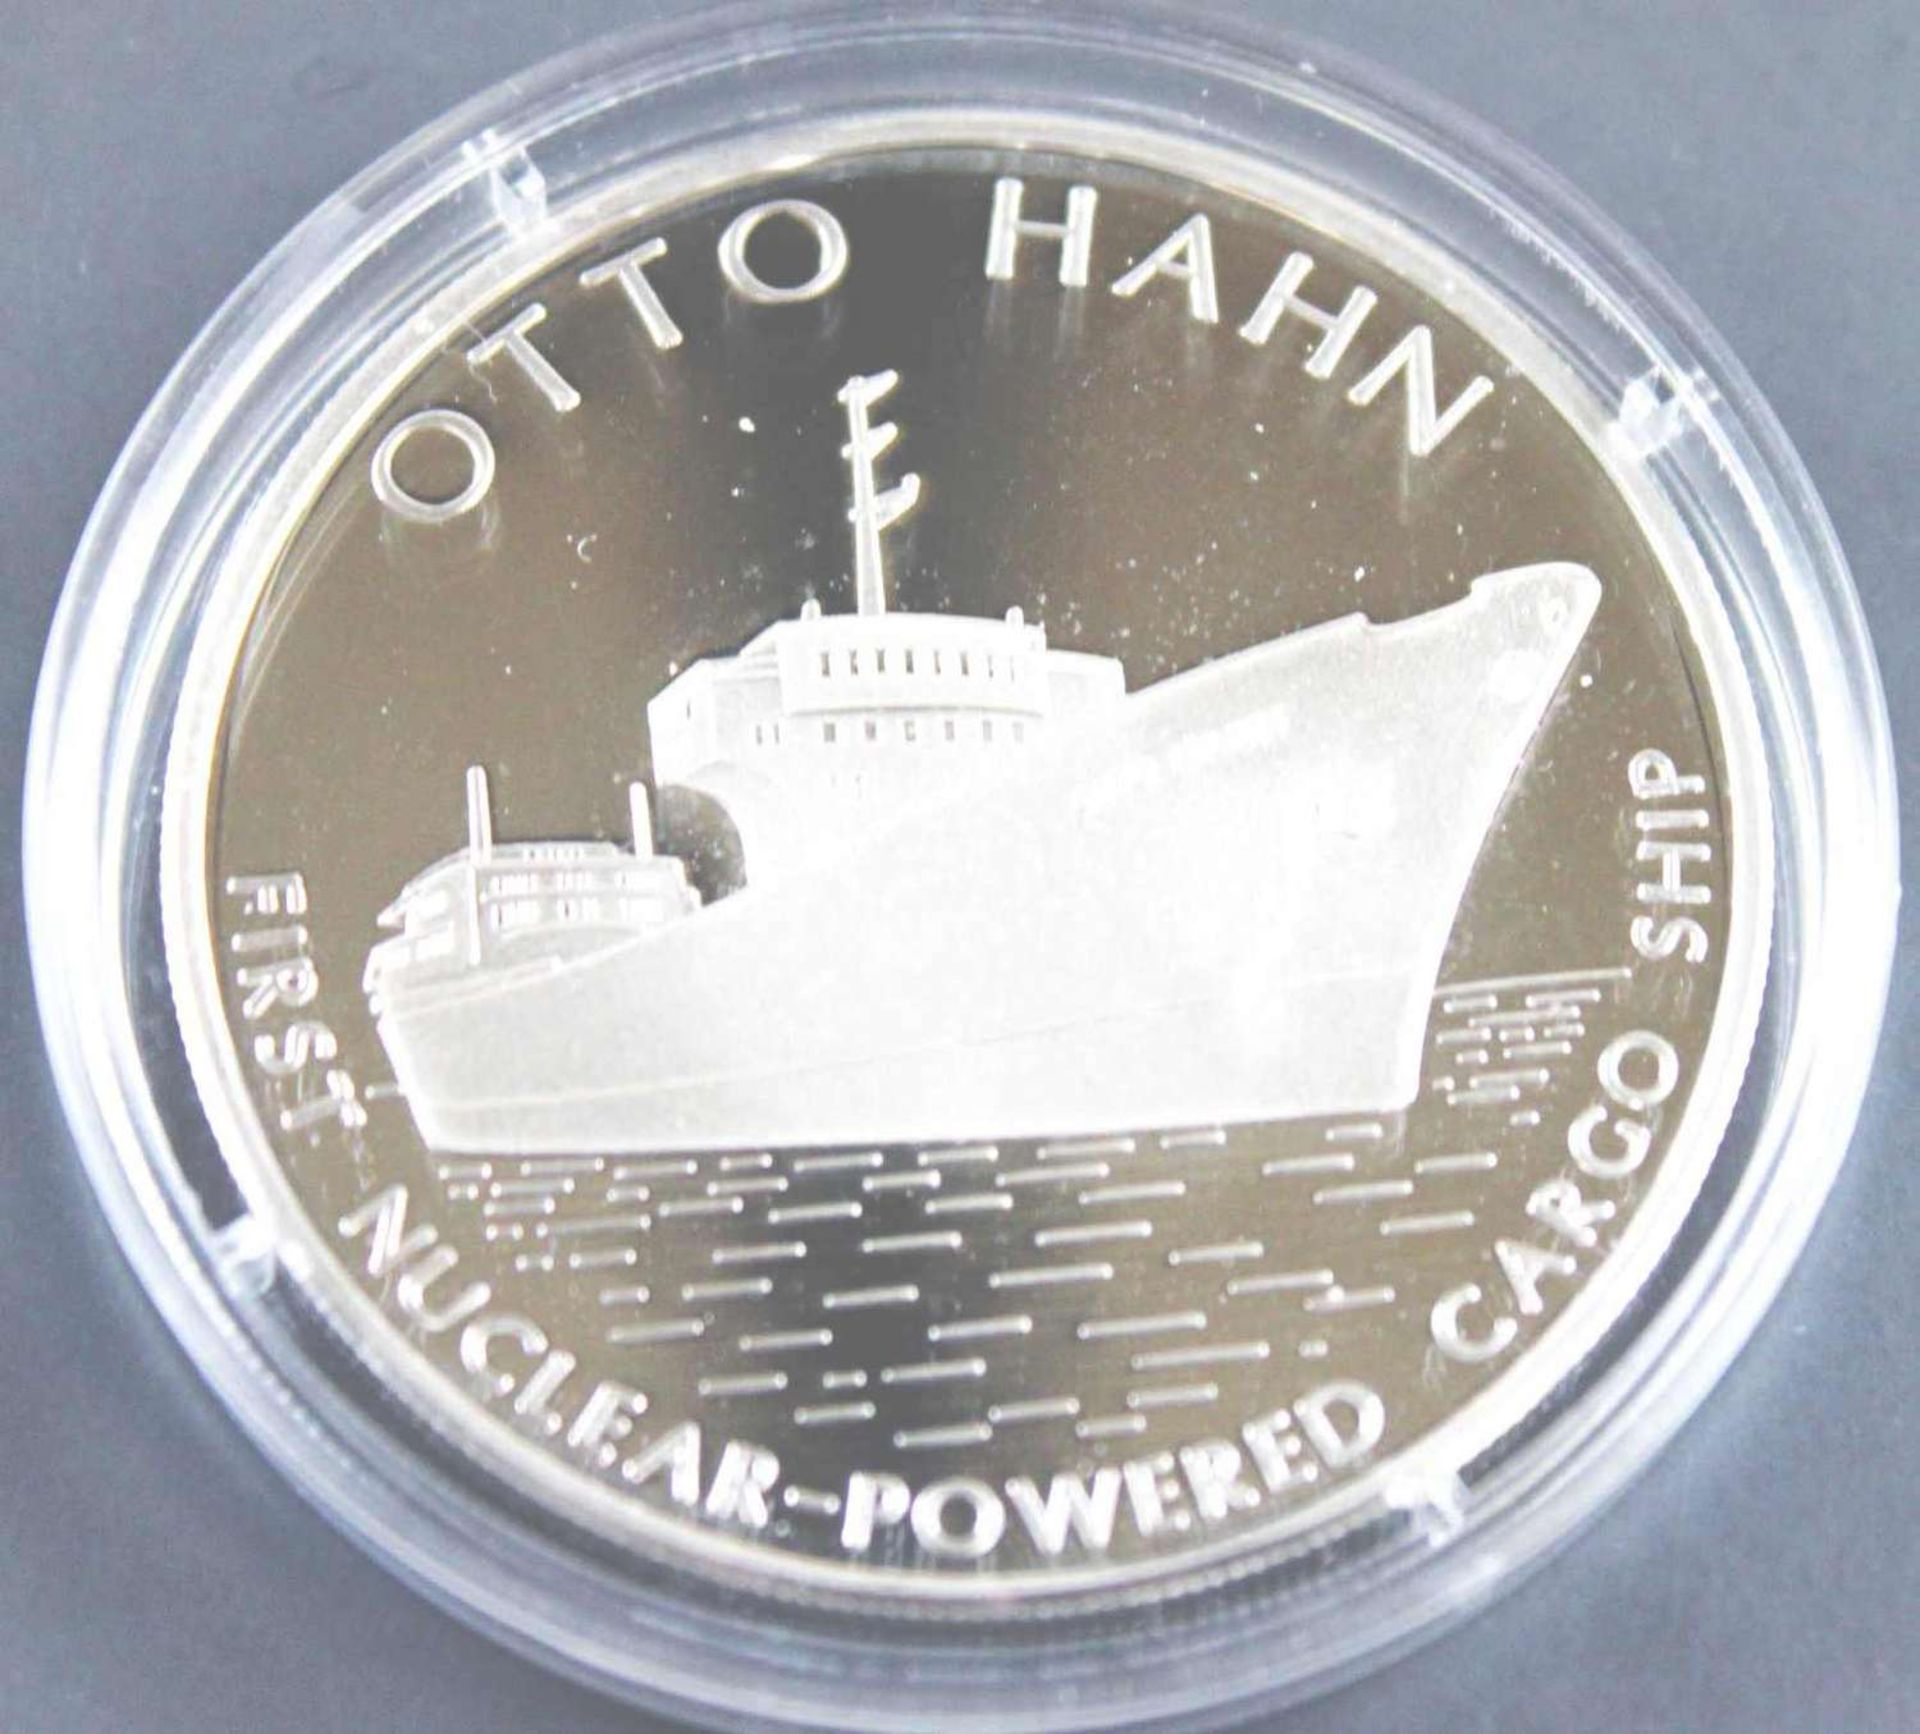 Somali Republic 2003, 250 Shillings - Silbermünze "Otto Hahn - das erste nuklear getriebene